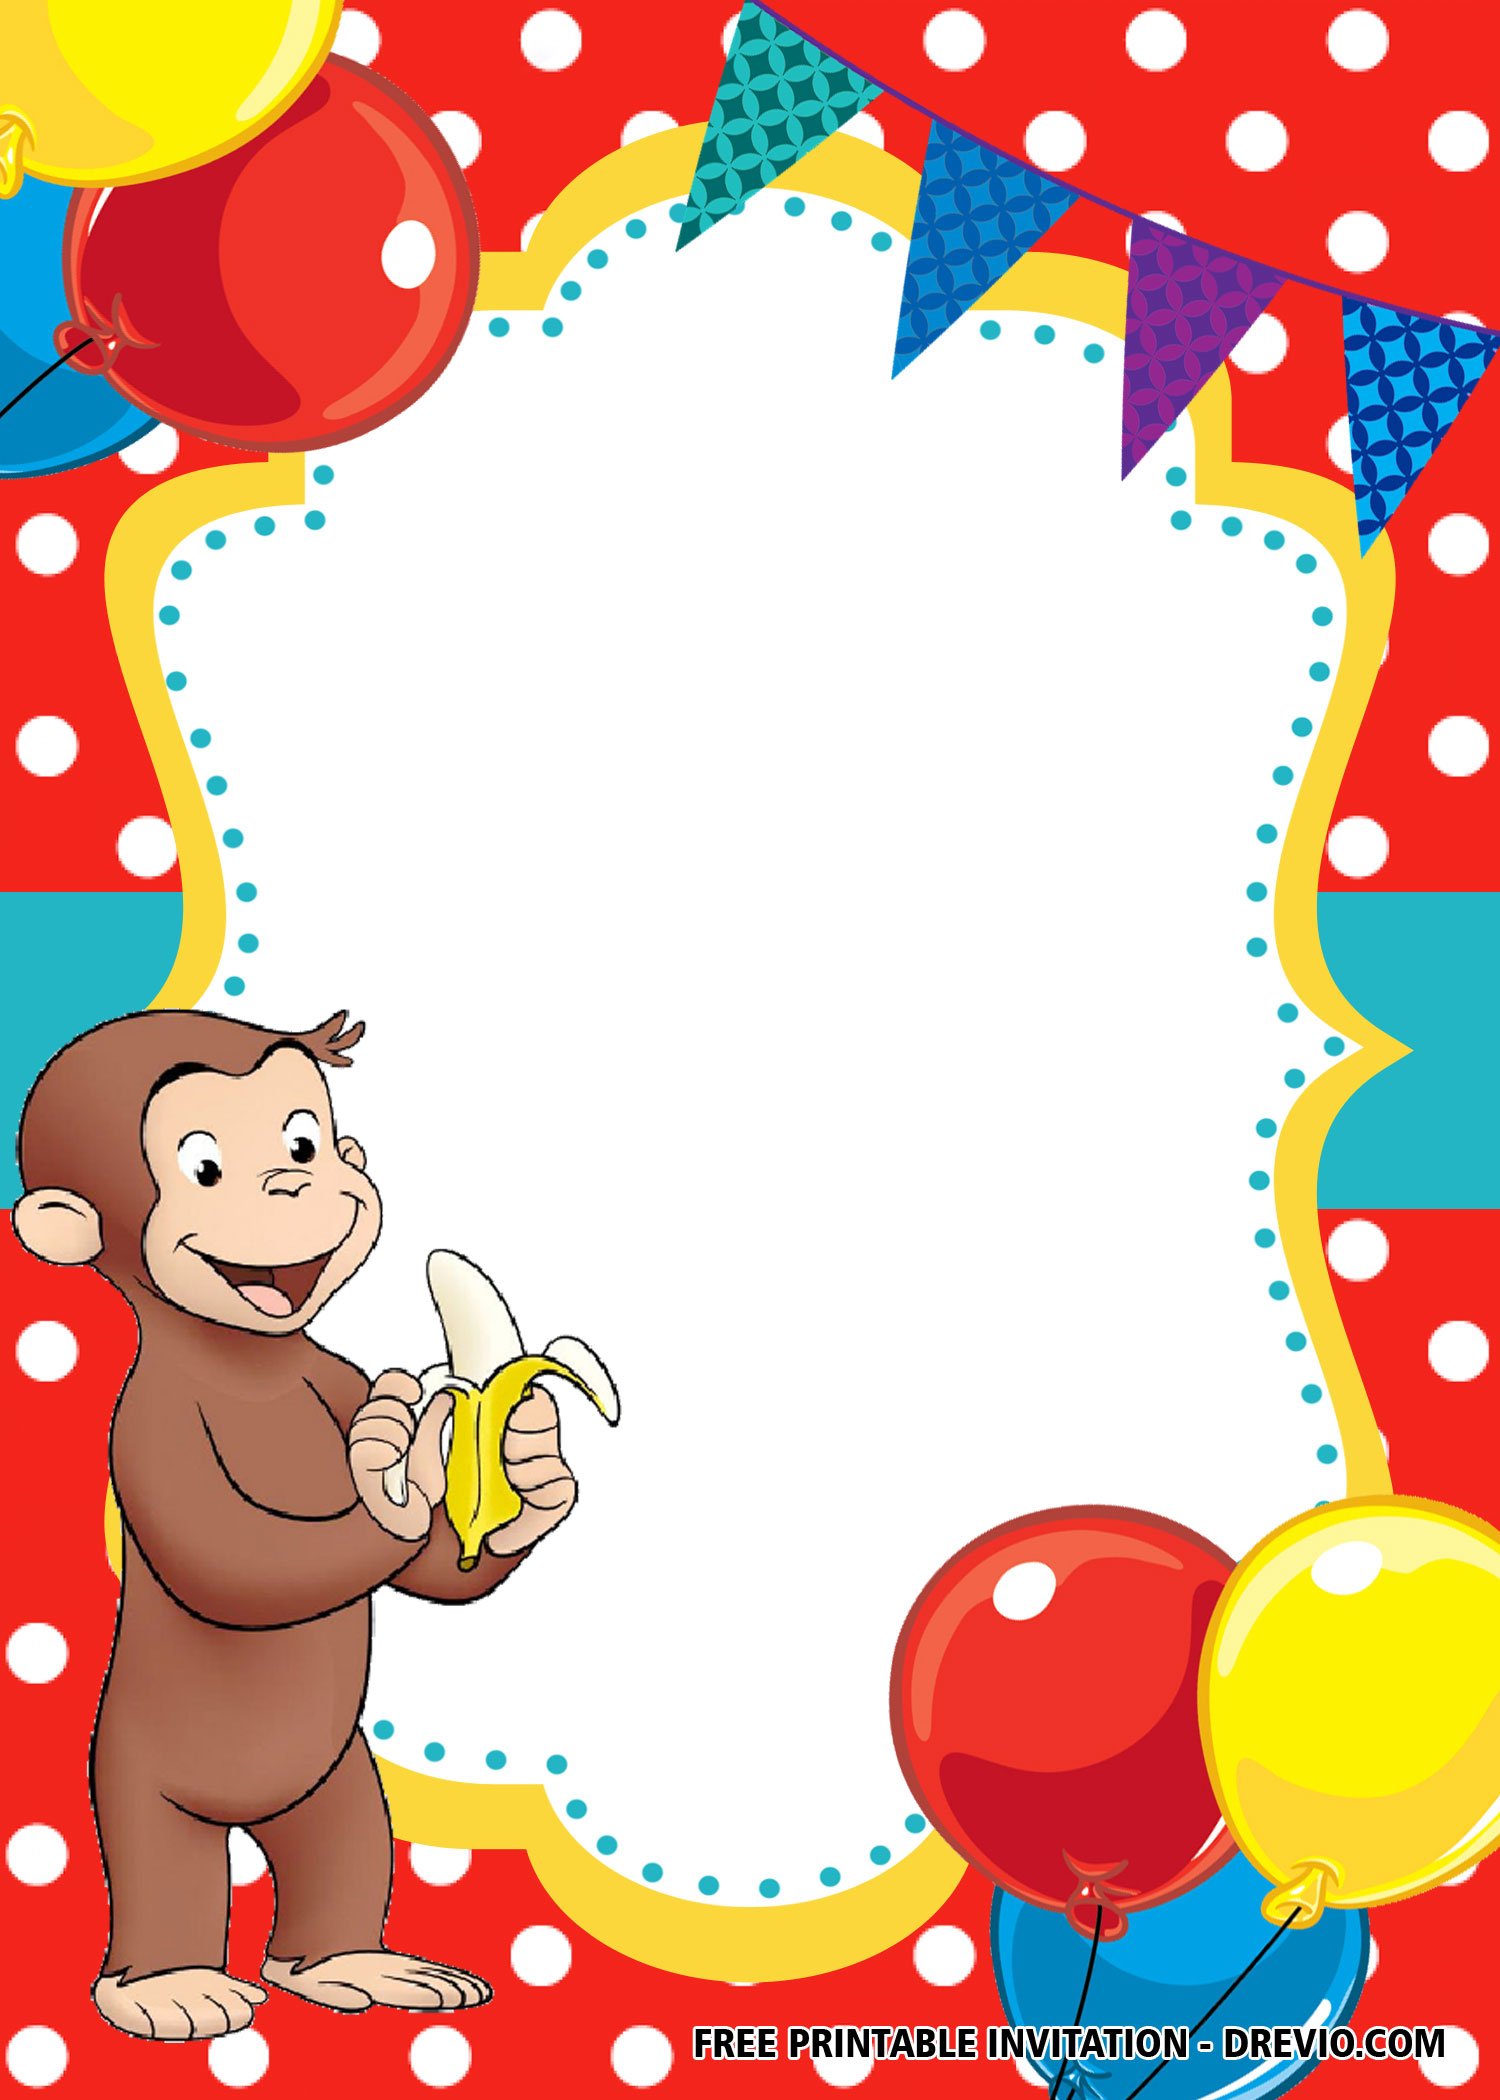 FREE Blank Curious George Invitation Templates | FREE Printable Birthday Invitation Templates ...